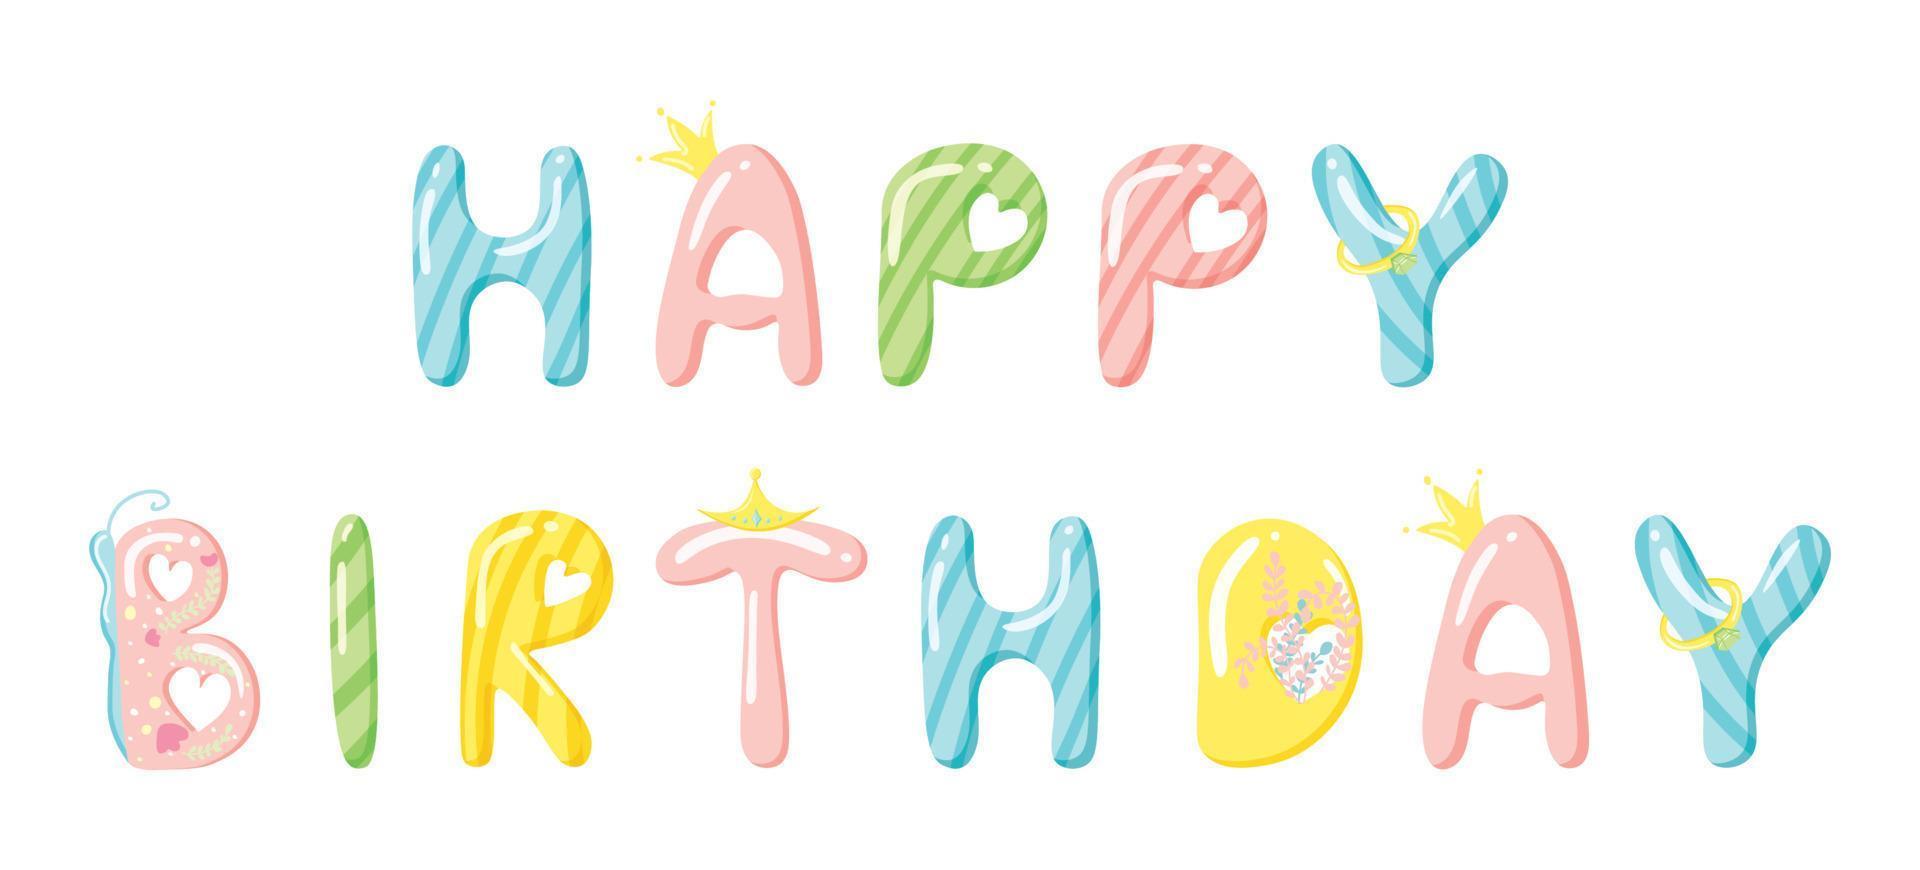 dulces letras de feliz cumpleaños. divertidas letras de caramelo de caramelo. diseño festivo para bebés para baby showers, afiches, pancartas, arte mural, tarjetas. linda ilustración vectorial con texto. vector